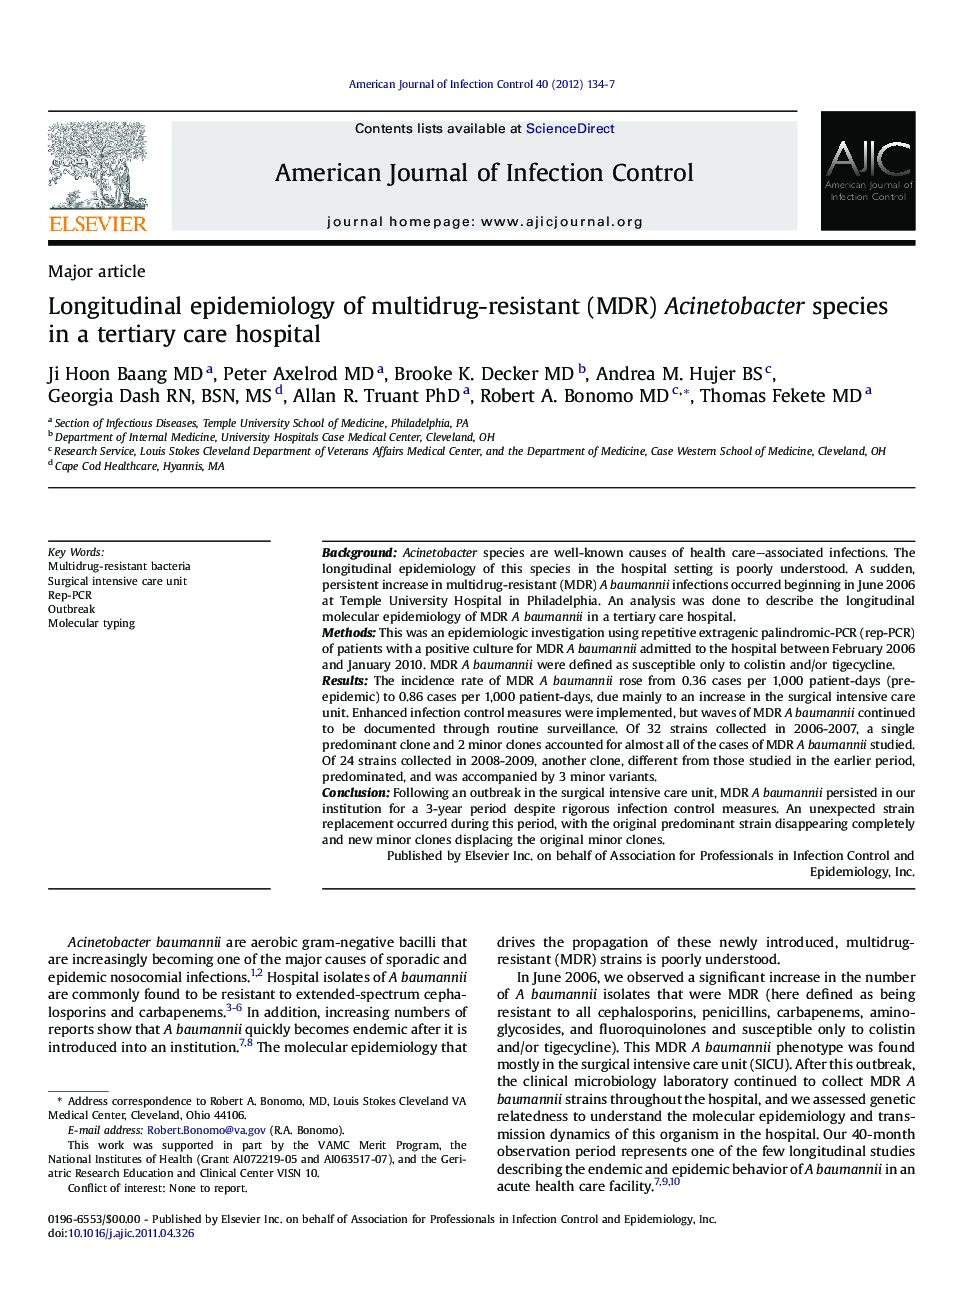 Longitudinal epidemiology of multidrug-resistant (MDR) Acinetobacter species in a tertiary care hospital 